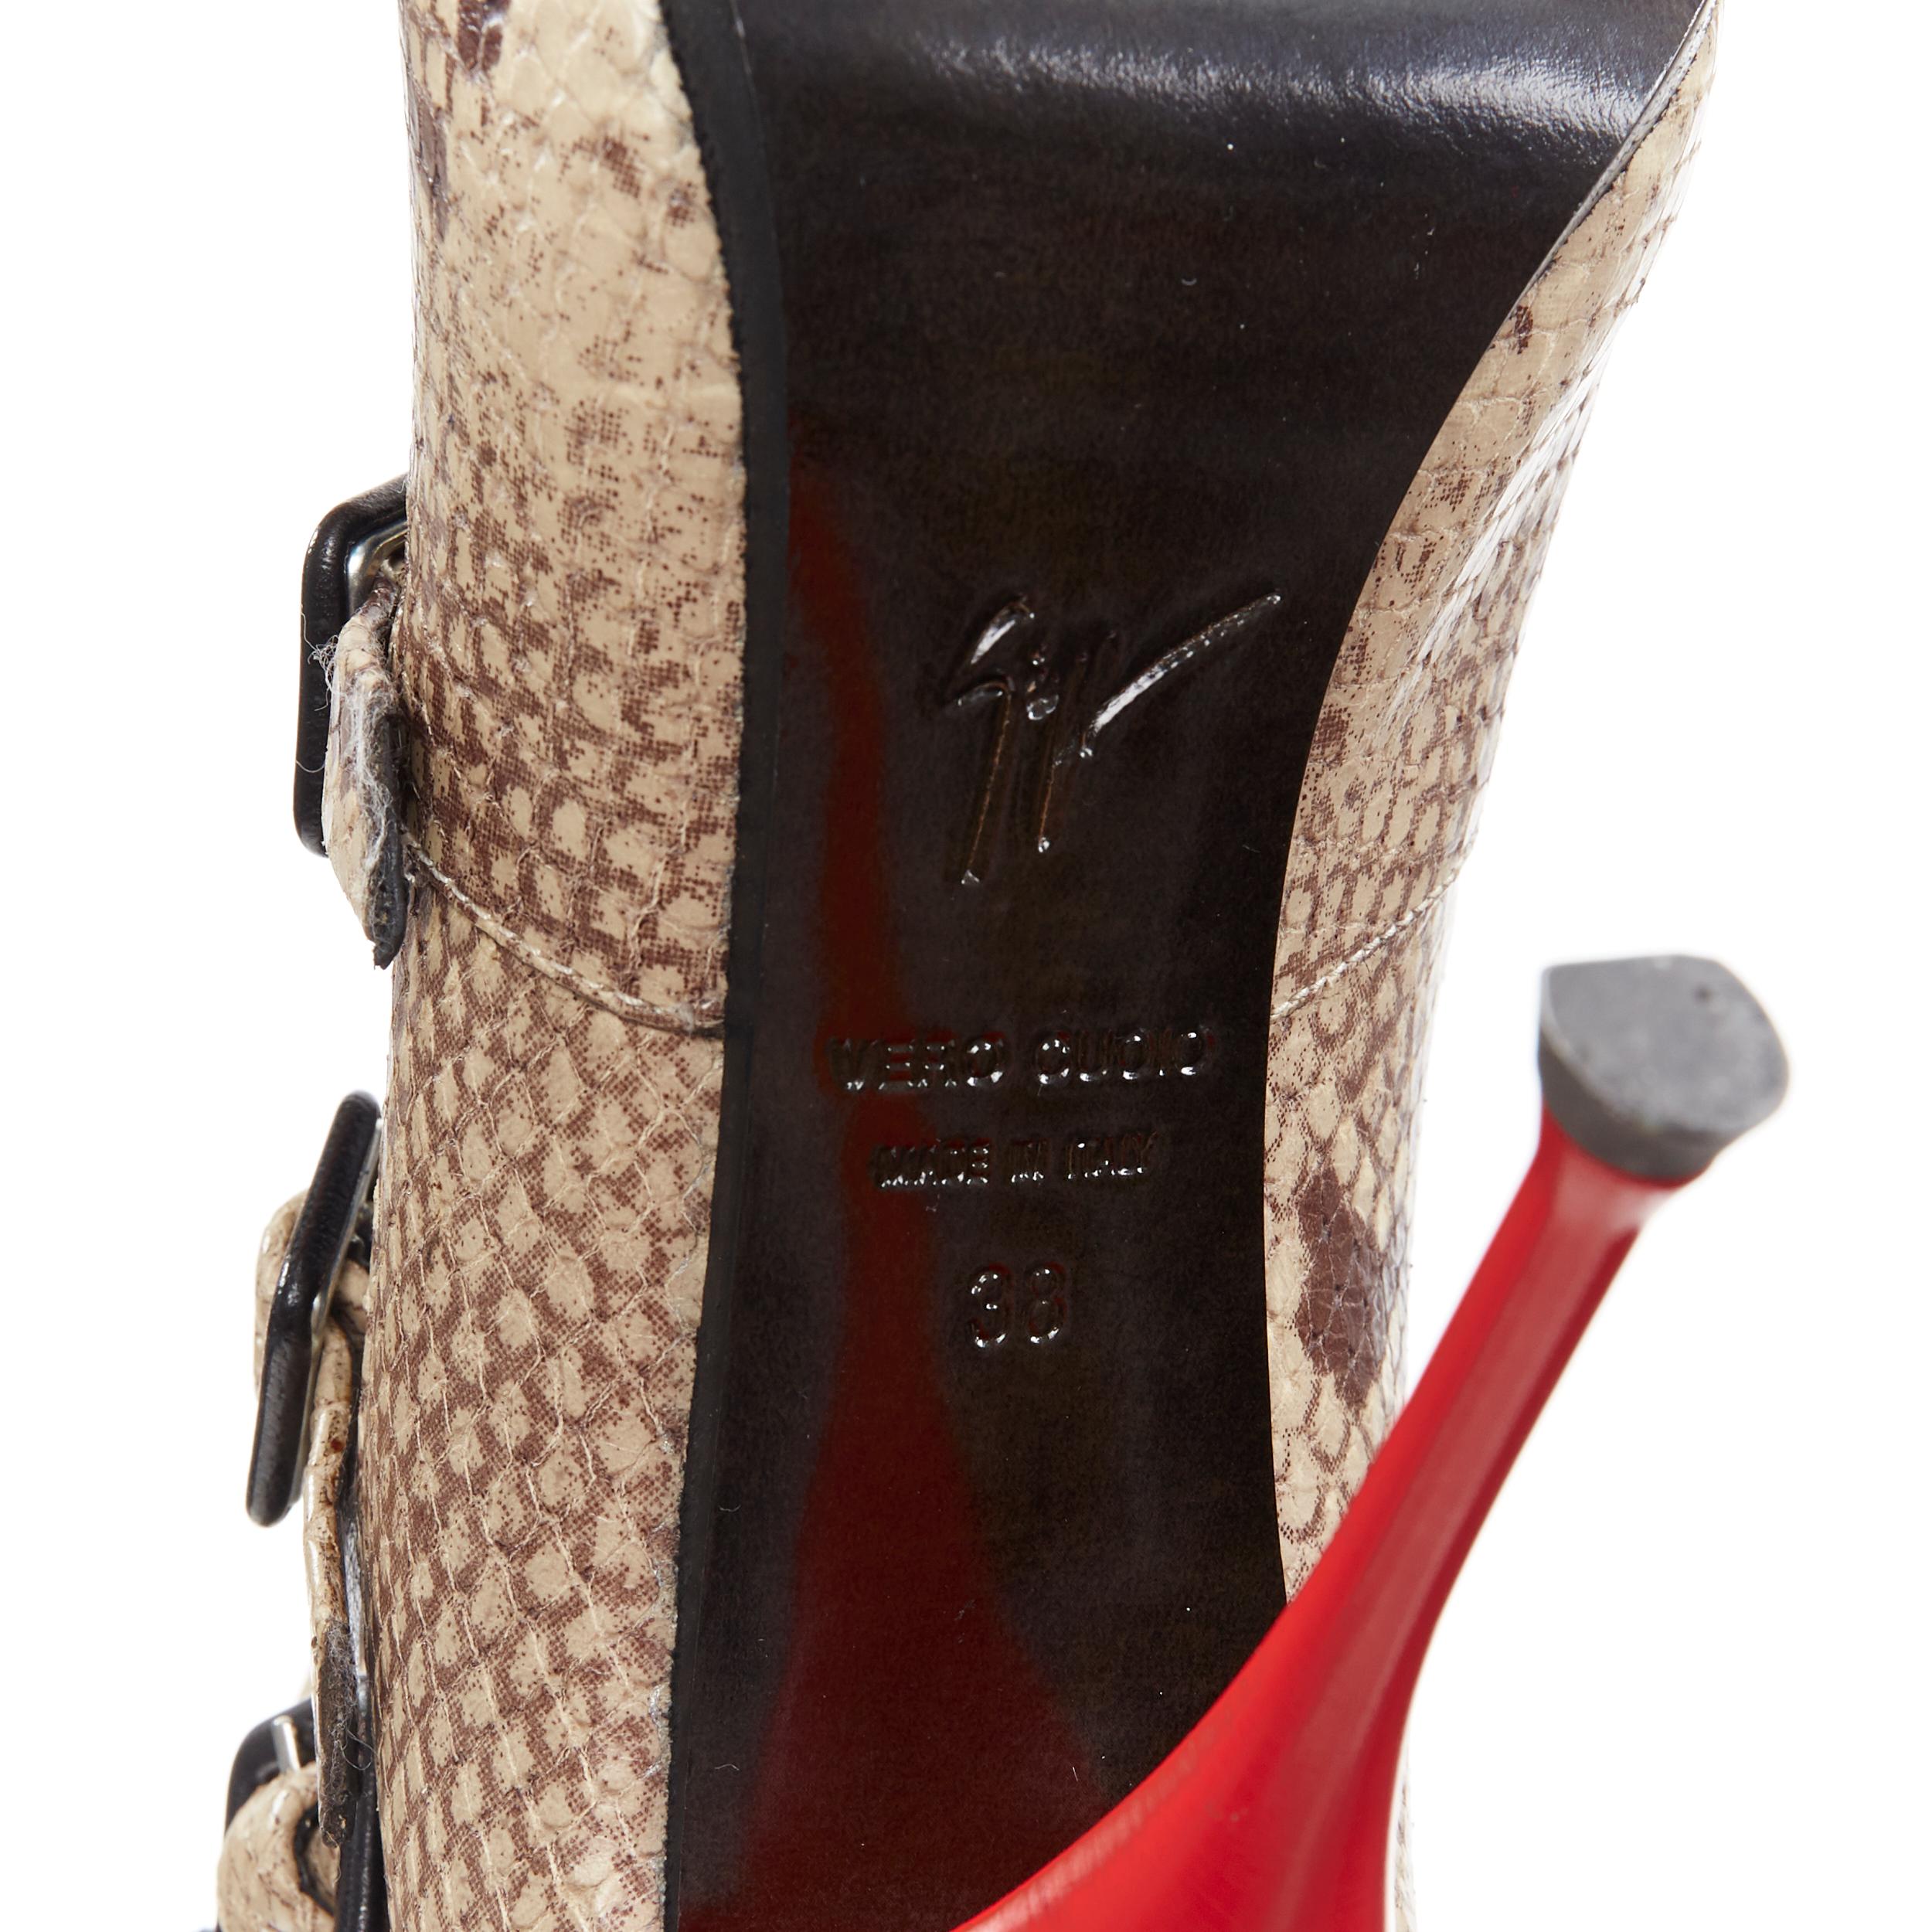 GIUSEPPE ZANOTTI printed calf leather strappy buckle red patent heel sandal EU38 7